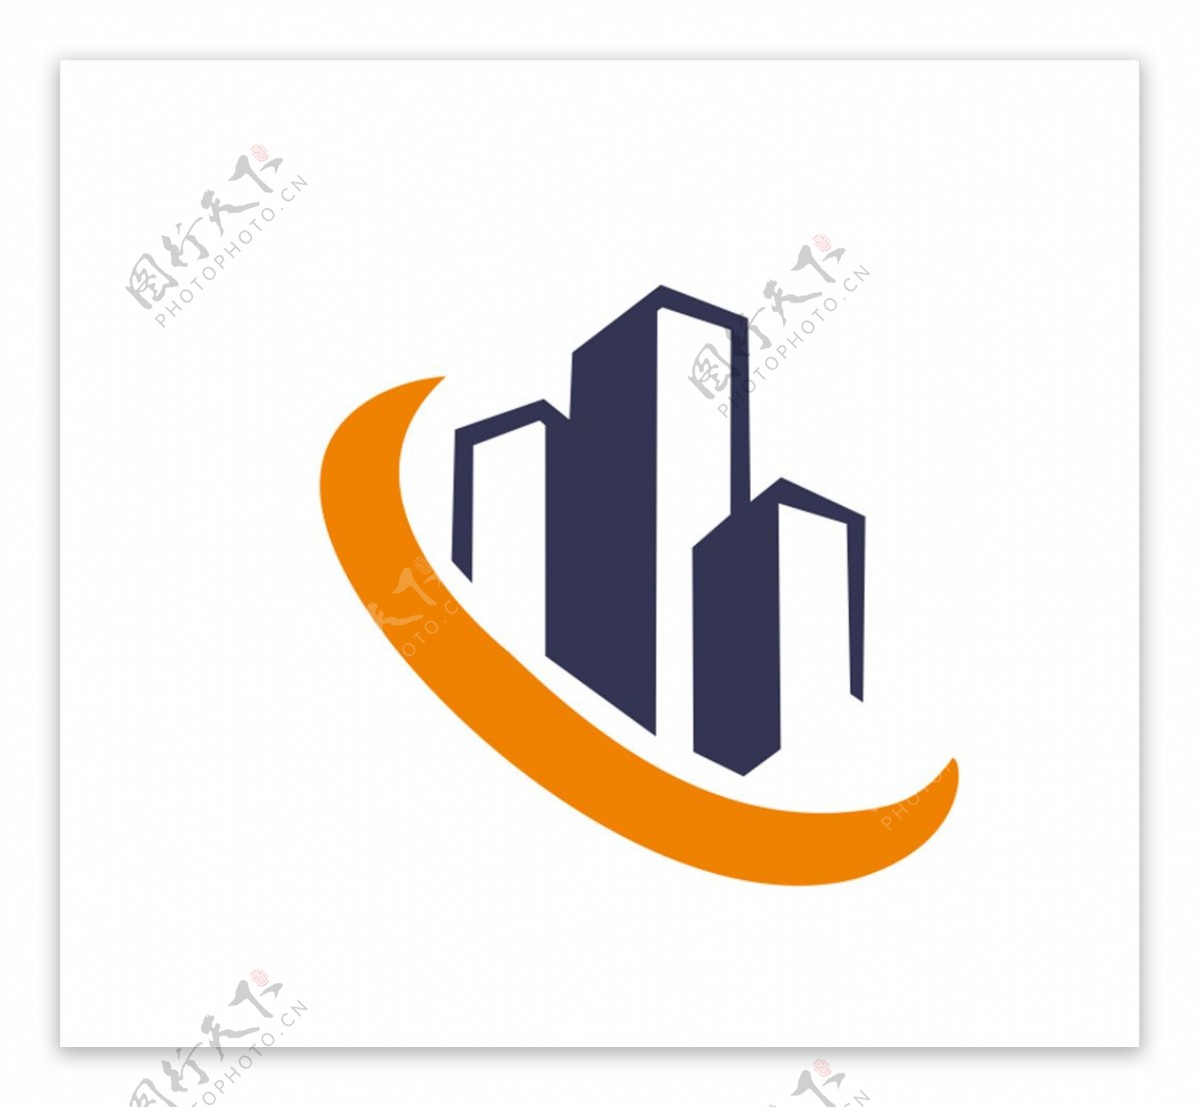 大厦logo